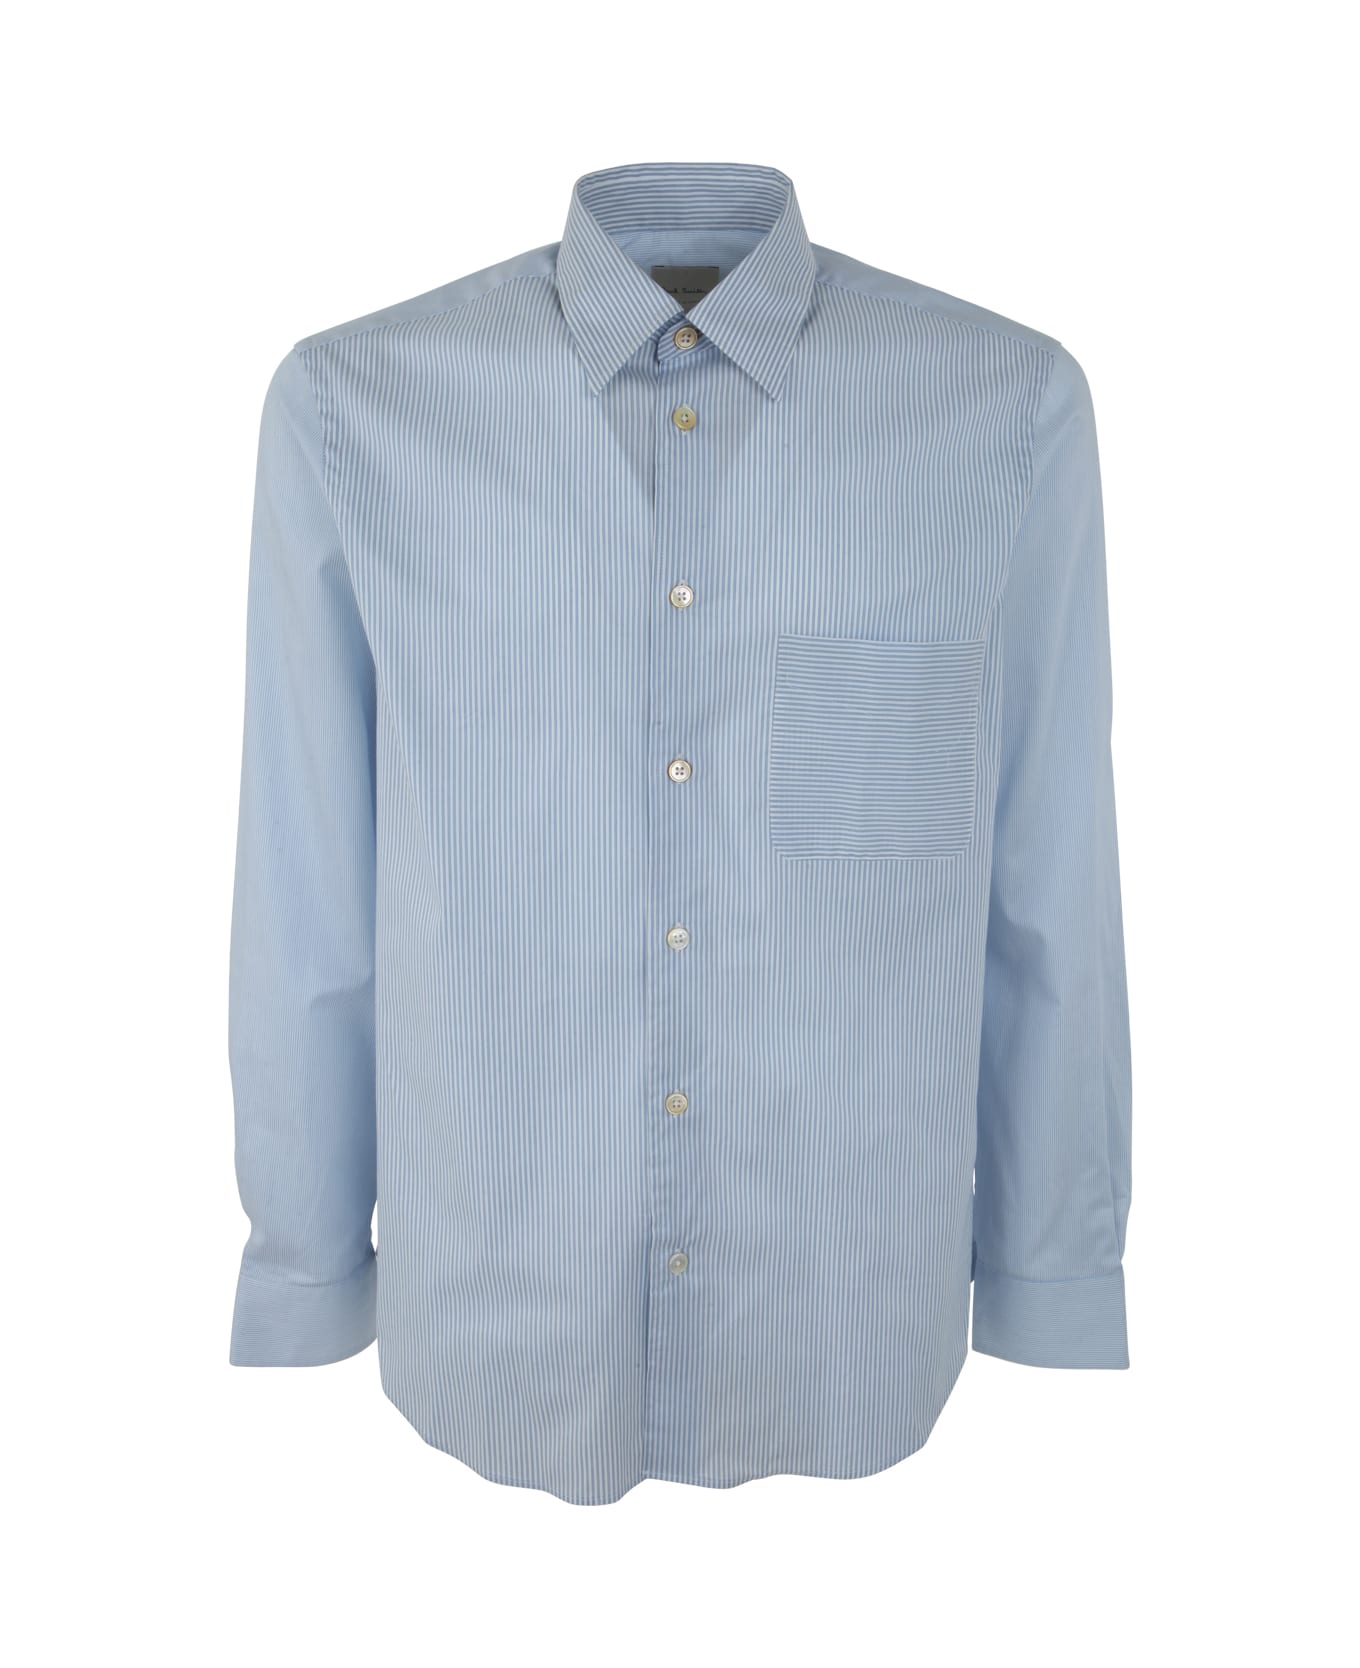 Paul Smith Mens Regular Fit Shirt - Blue